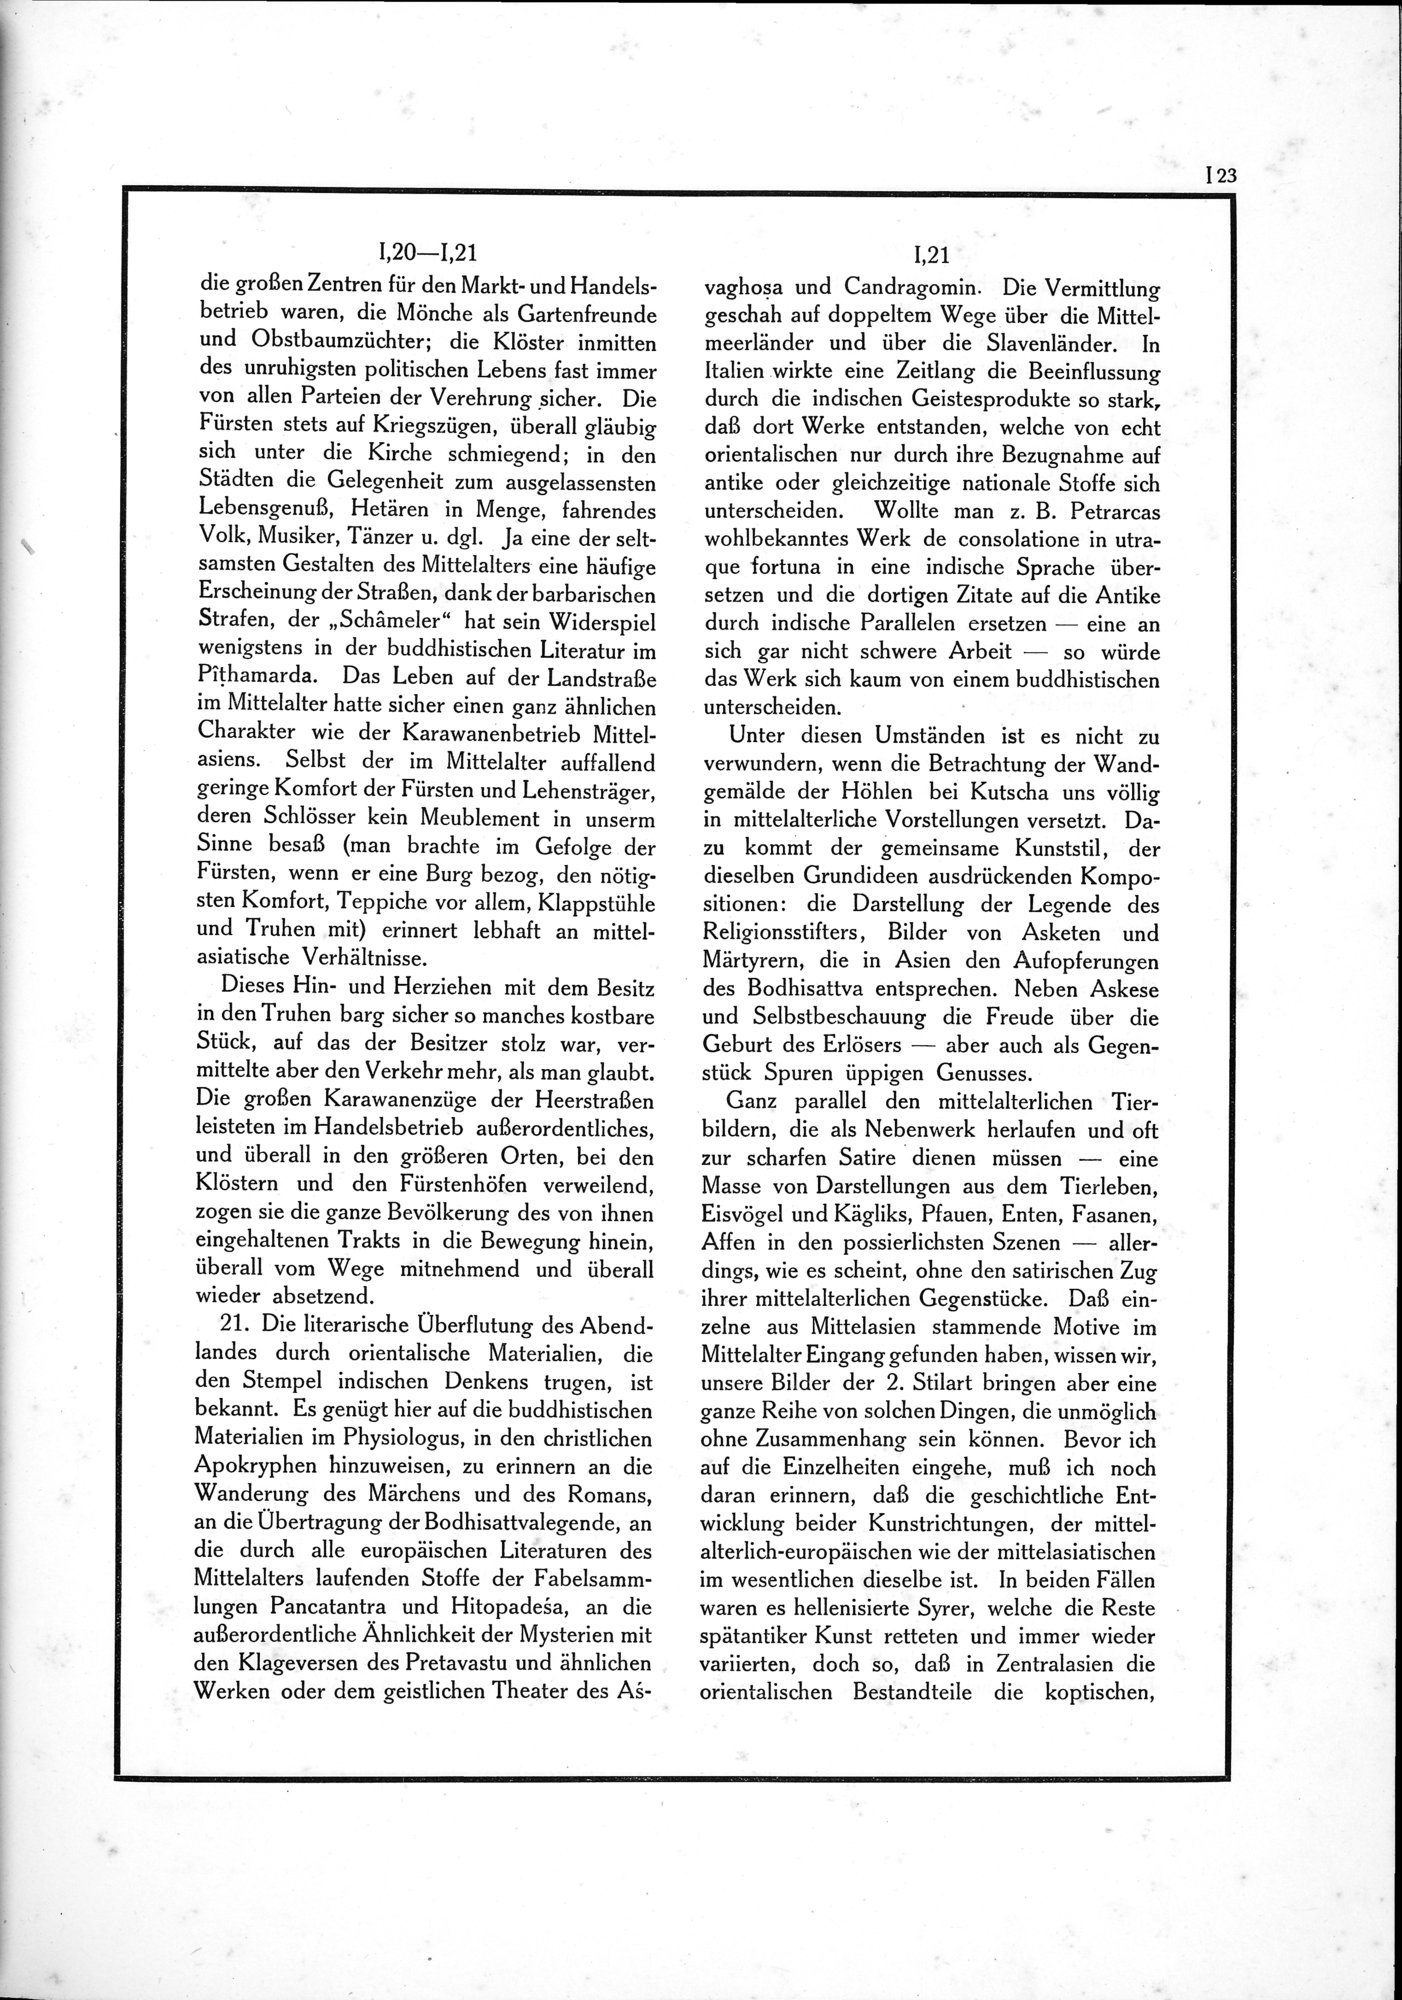 Alt-Kutscha : vol.1 / Page 35 (Grayscale High Resolution Image)